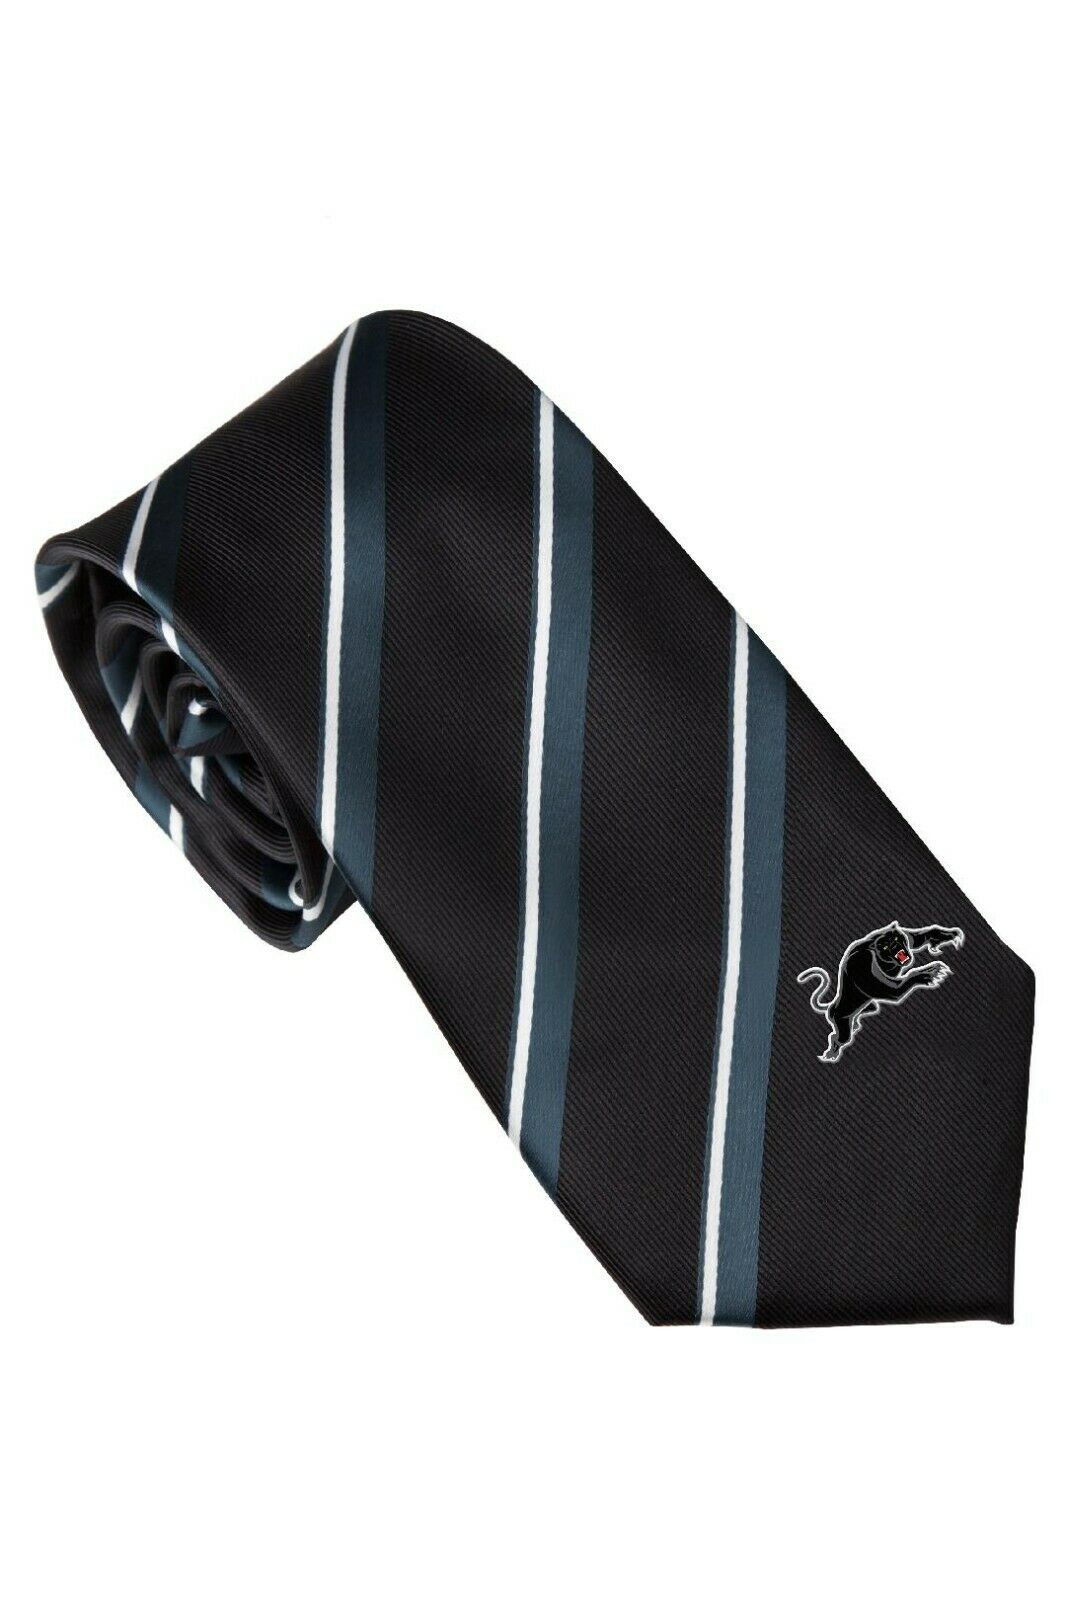 Penrith Panthers Stripe Tie – Footy Focus